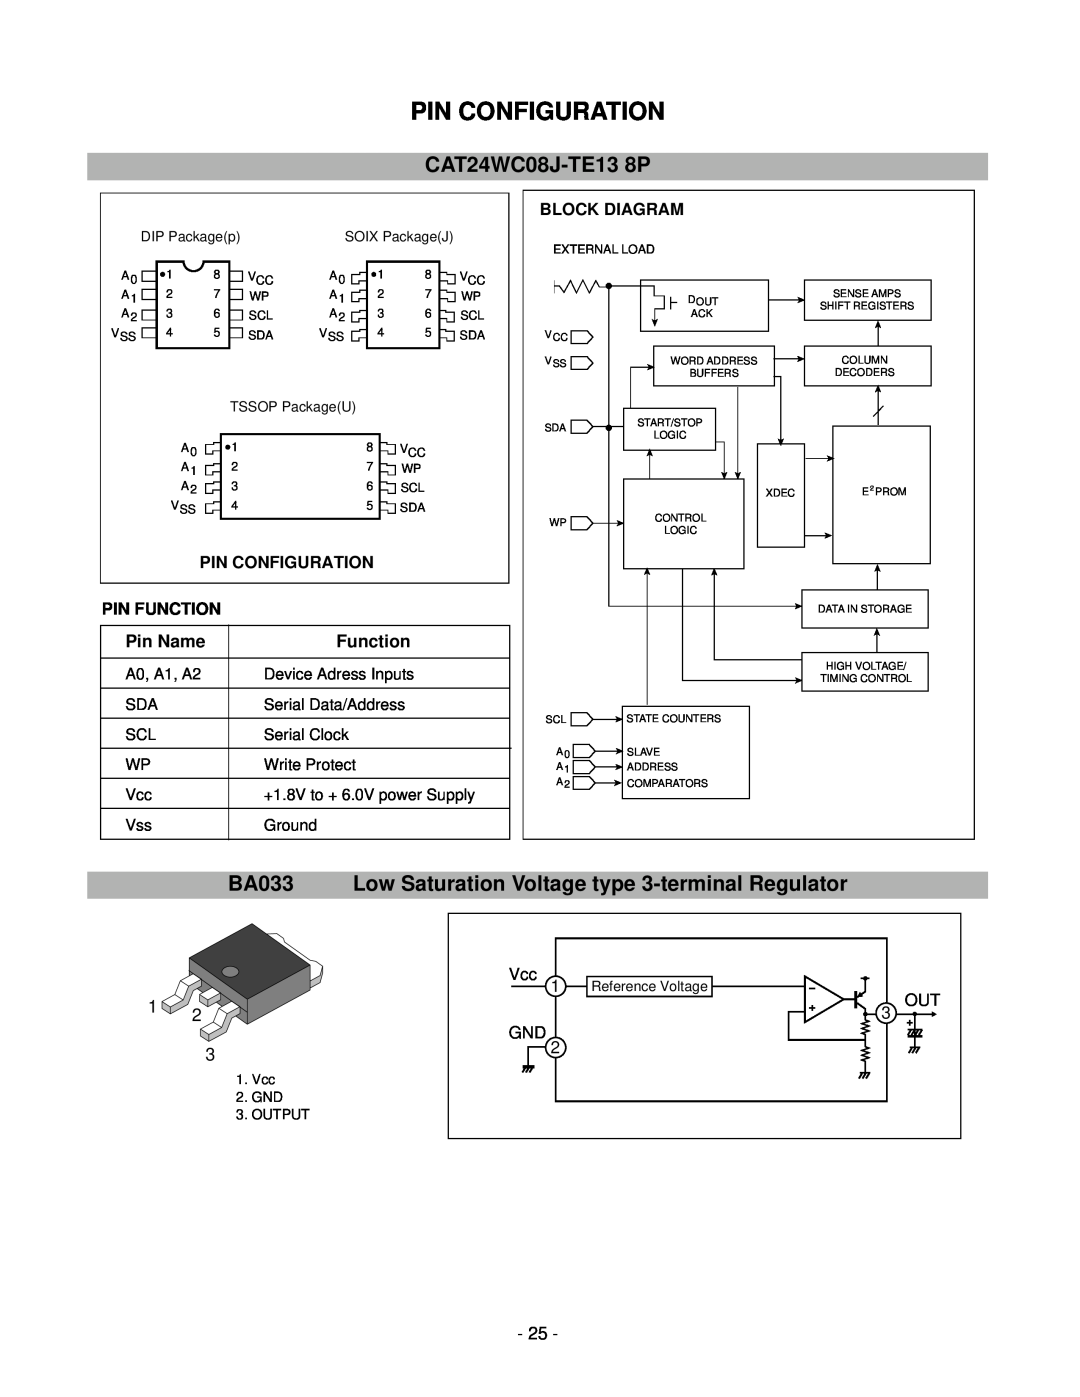 LG Electronics LCD 782LS Pin Configuration, CAT24WC08J-TE13 8P, BA033 Low Saturation Voltage type 3-terminal Regulator 